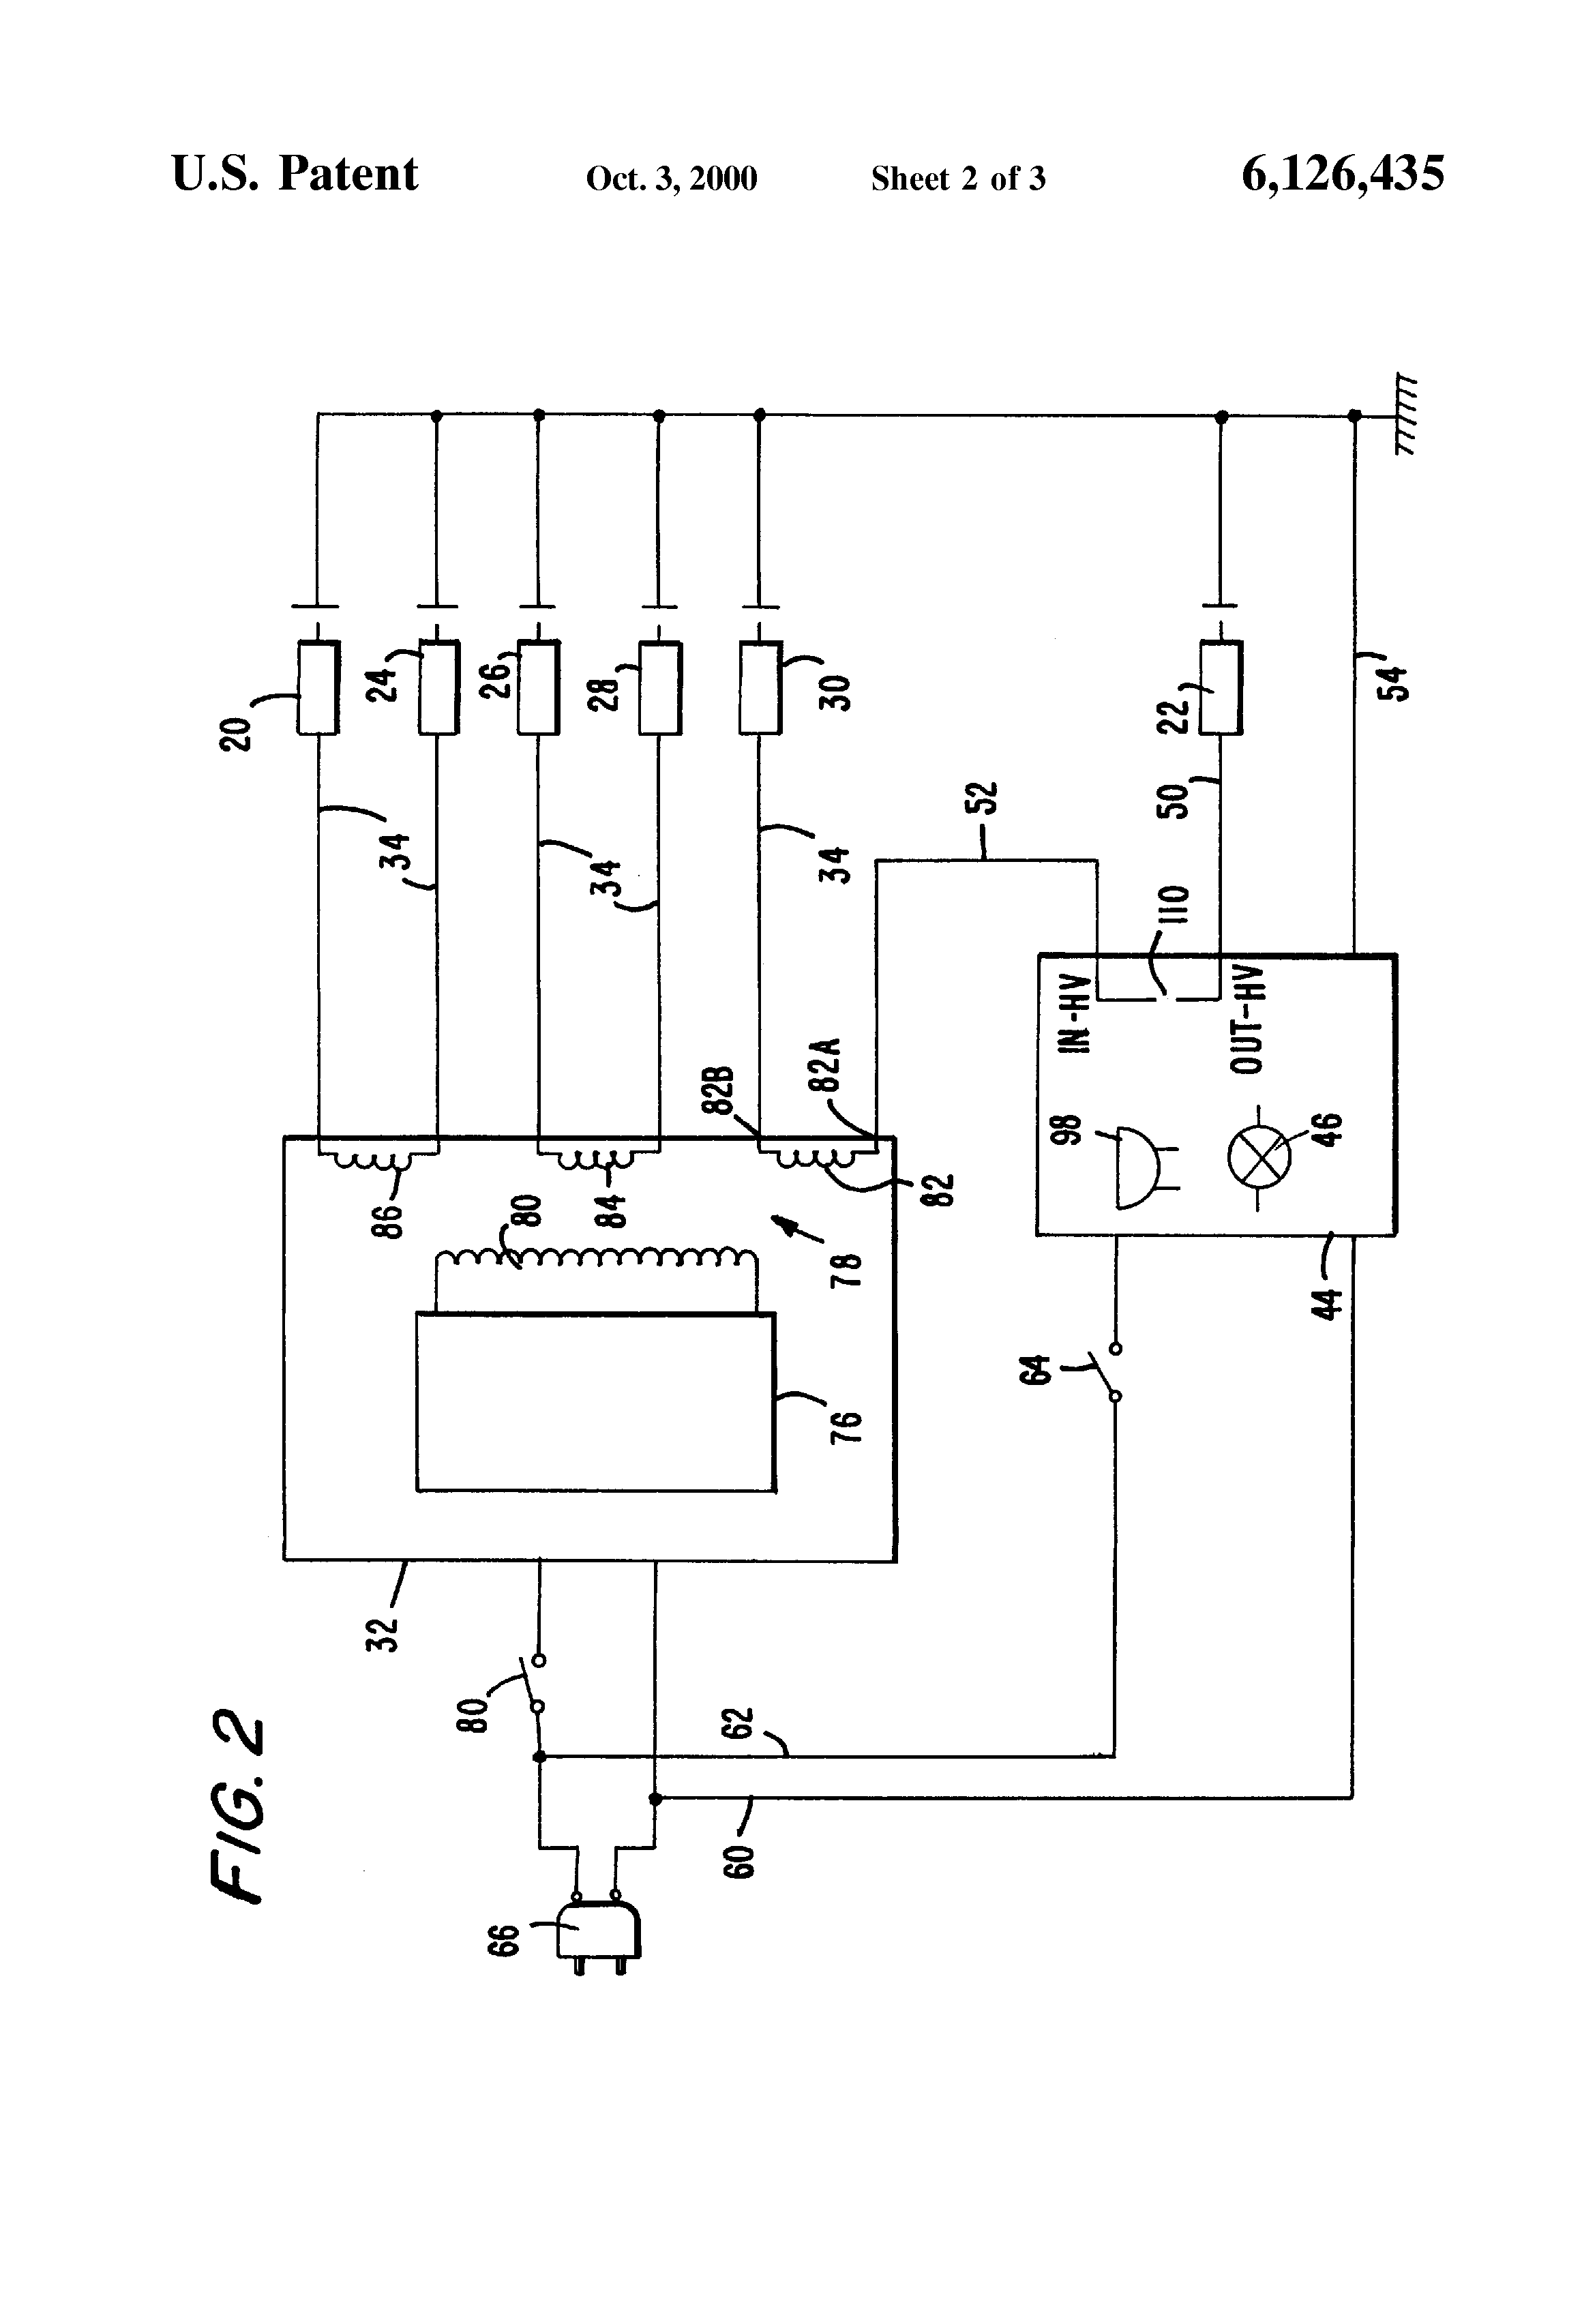 falts57c-05t-120-a wiring diagram